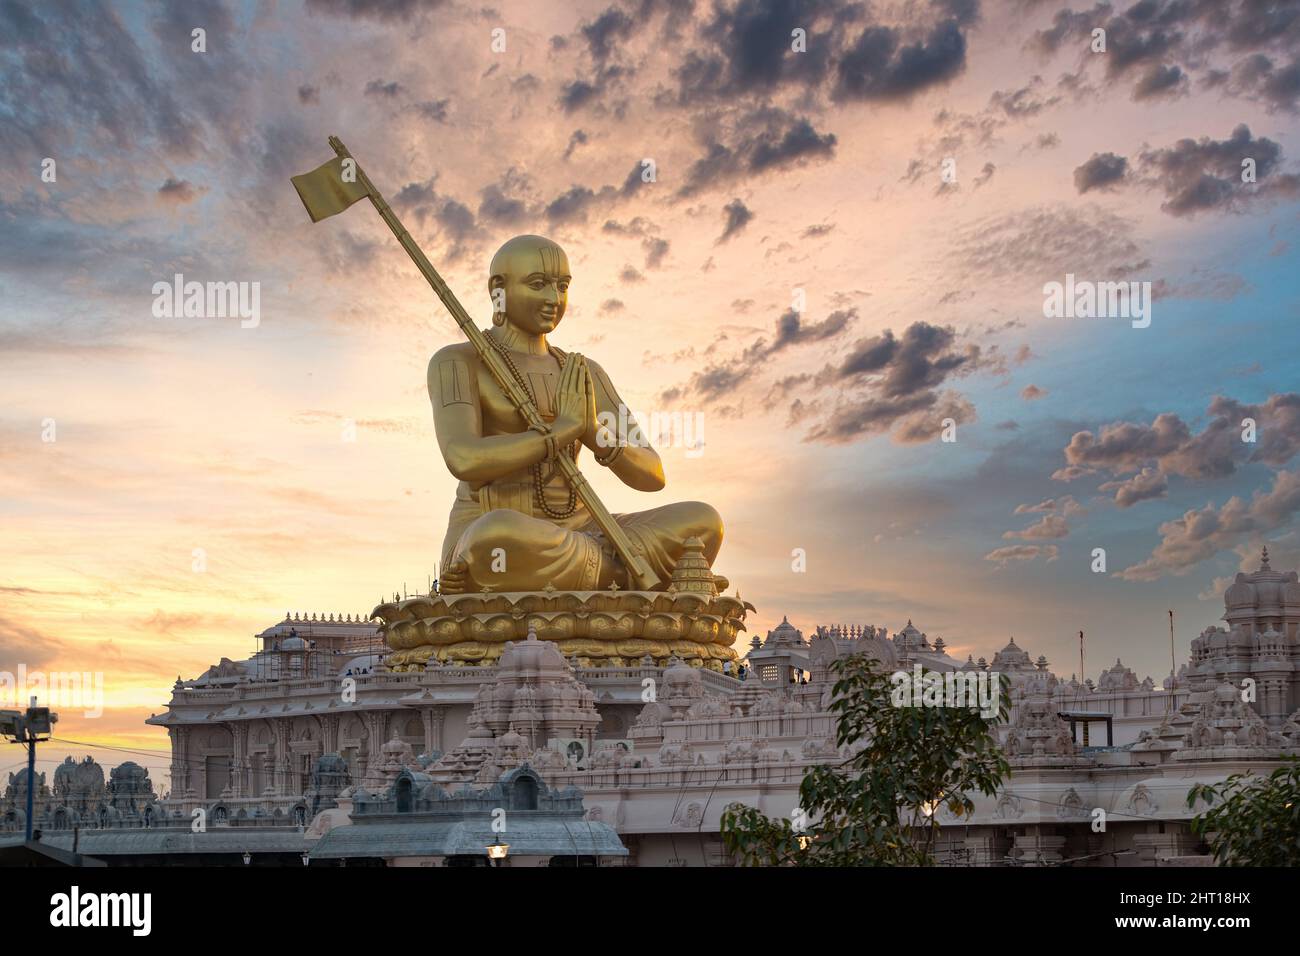 Statue de Ramanuja, statue de l'égalité, Muchintal, Hyderabad, Telengana, Inde. Banque D'Images